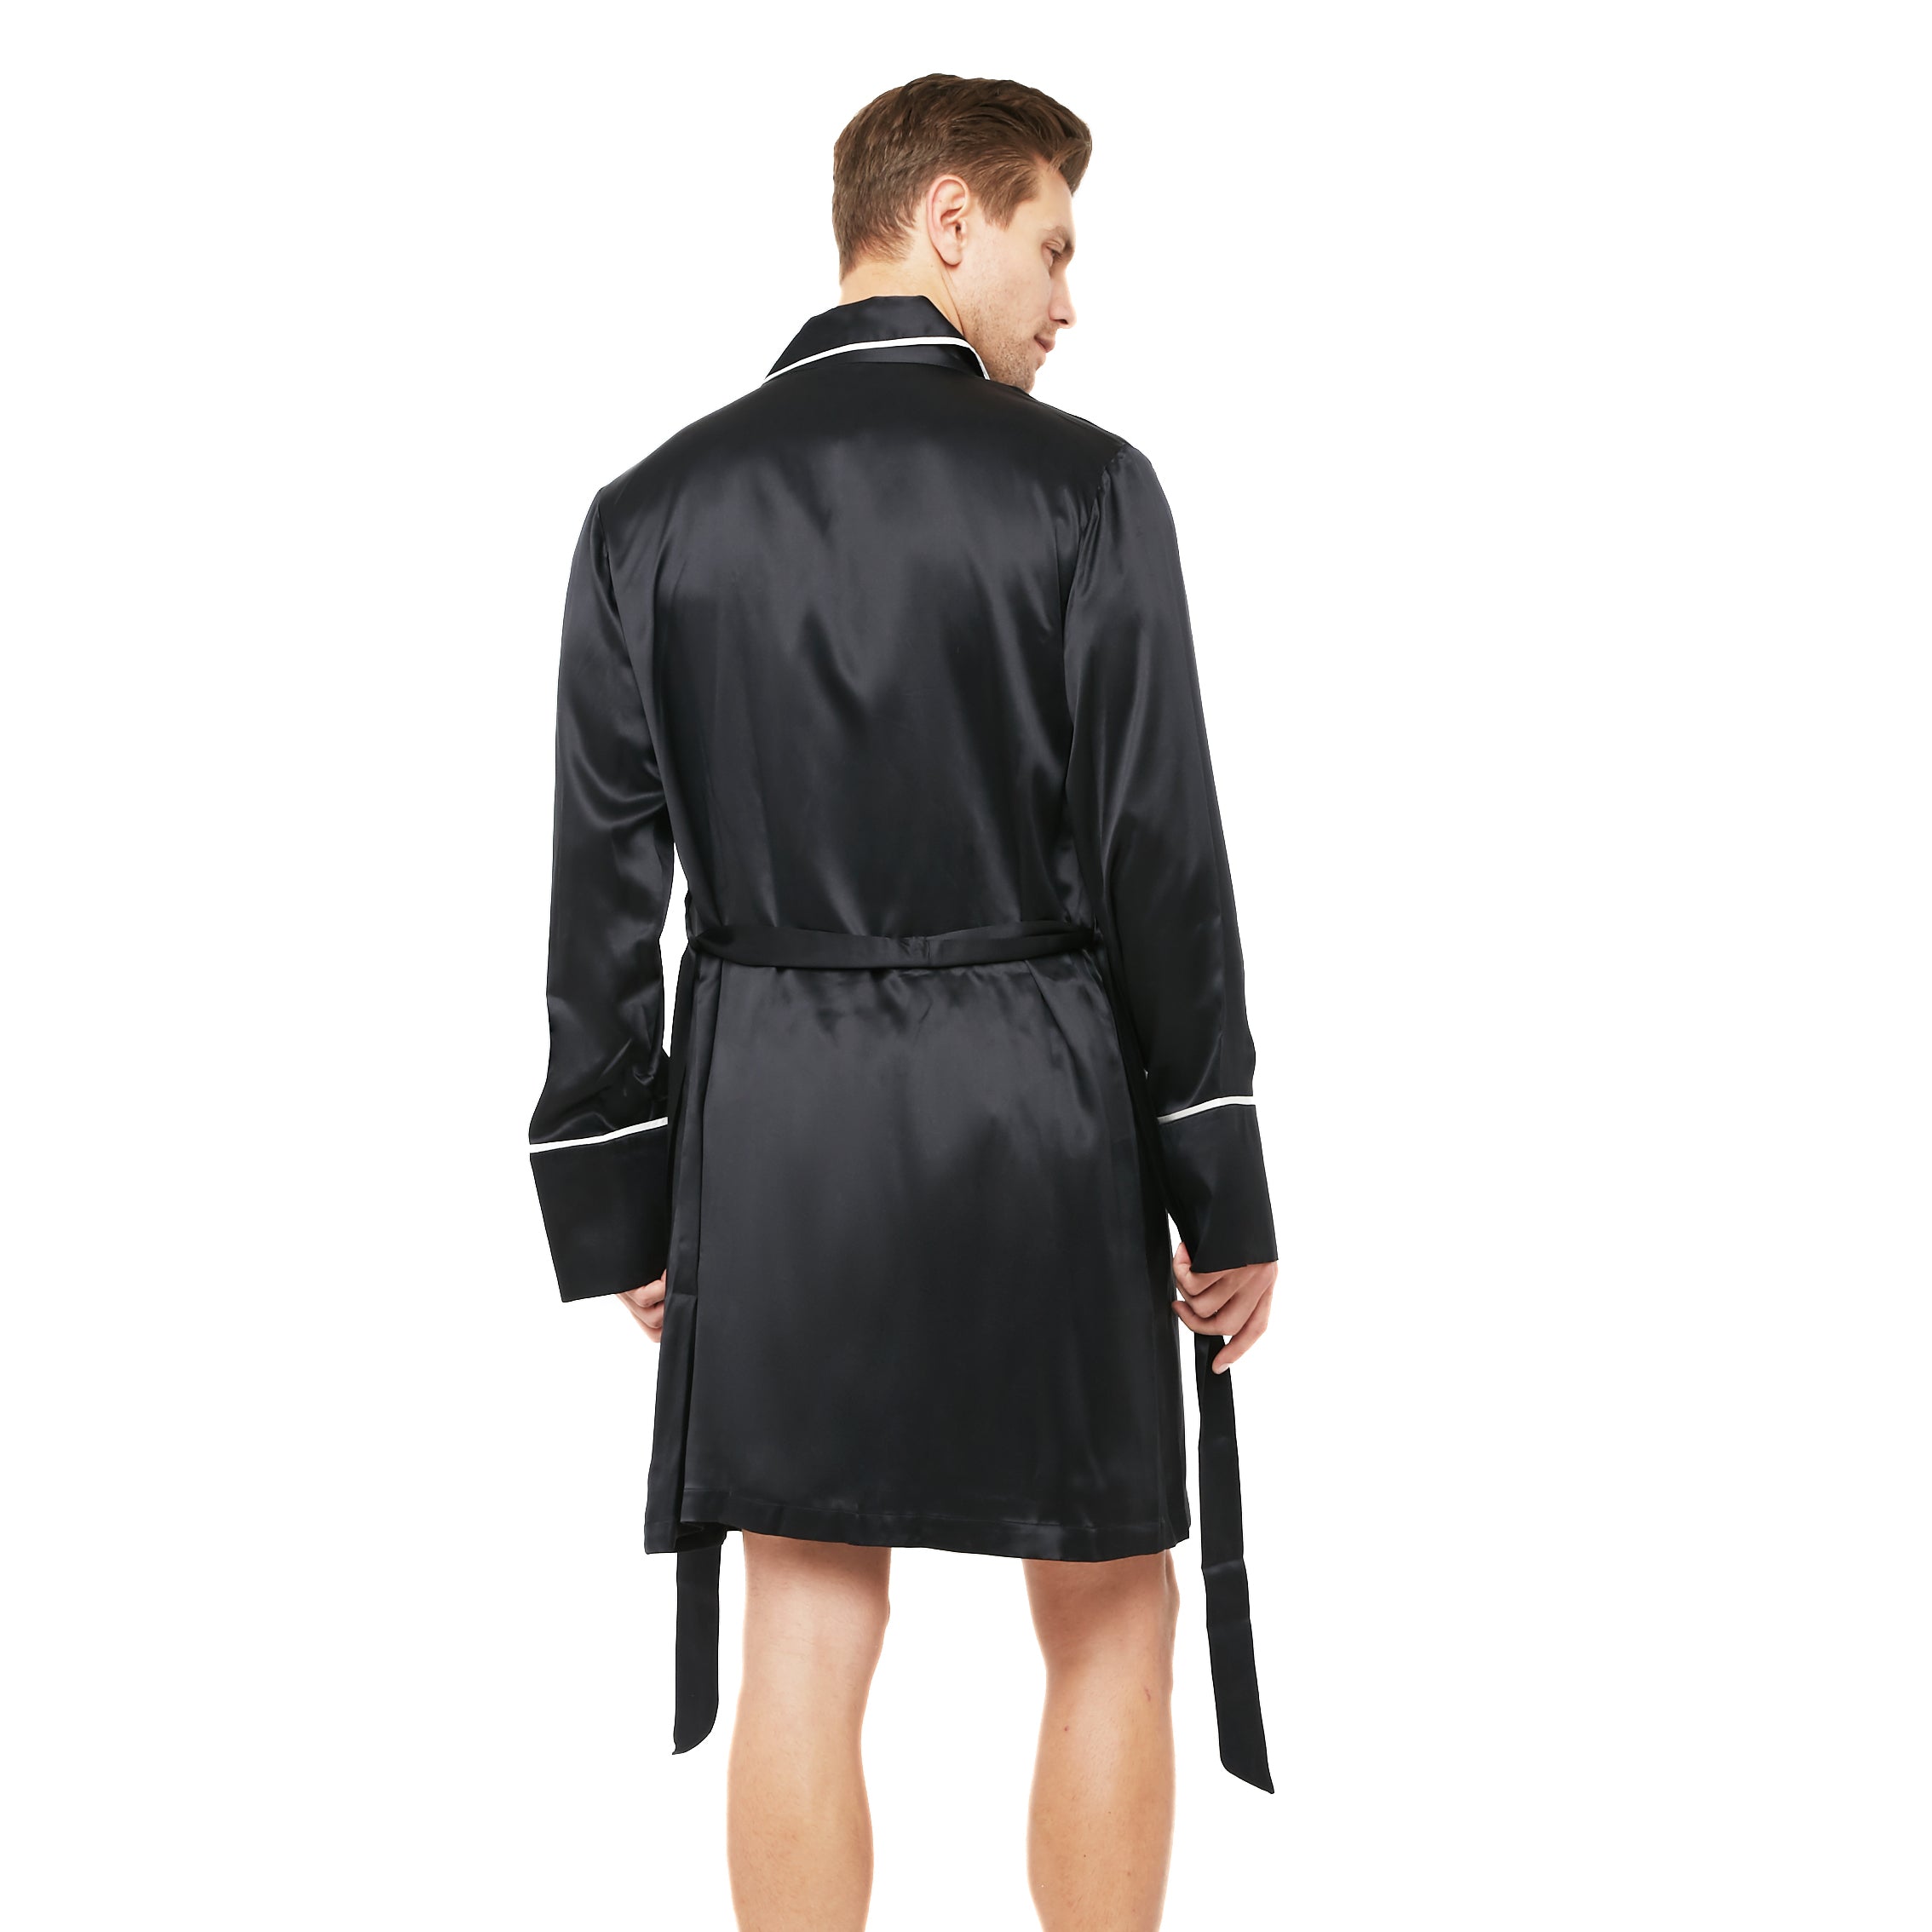 RealSilkLife Men's Luxury Silk Robe